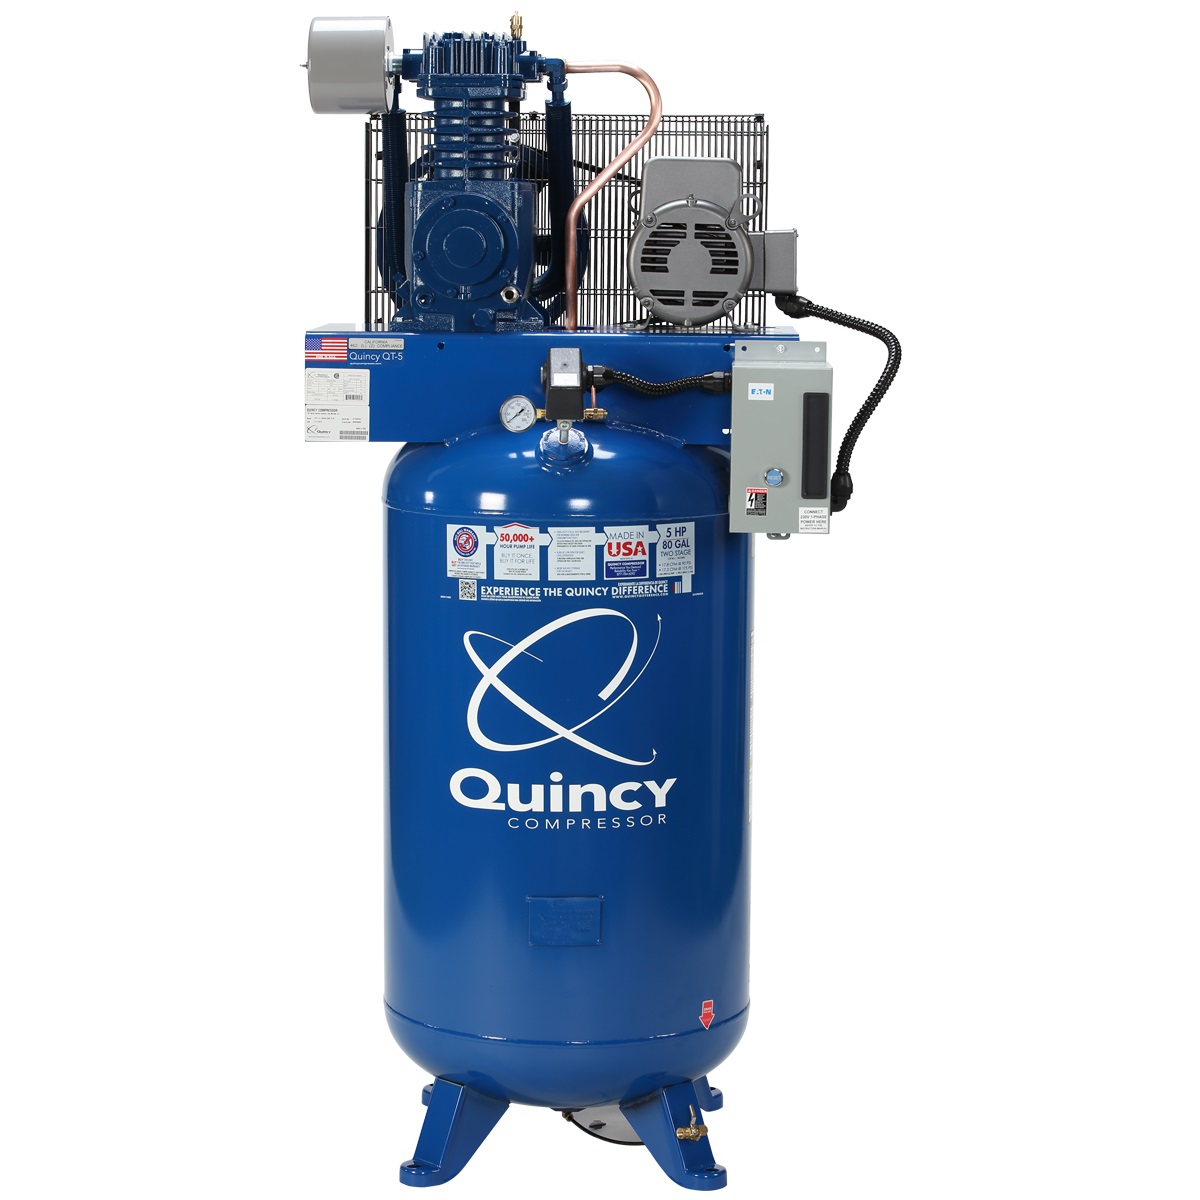 Quincy QT 5 80 Gallon lon 5 HP Two Stage Air Compressor 251CS80VCB